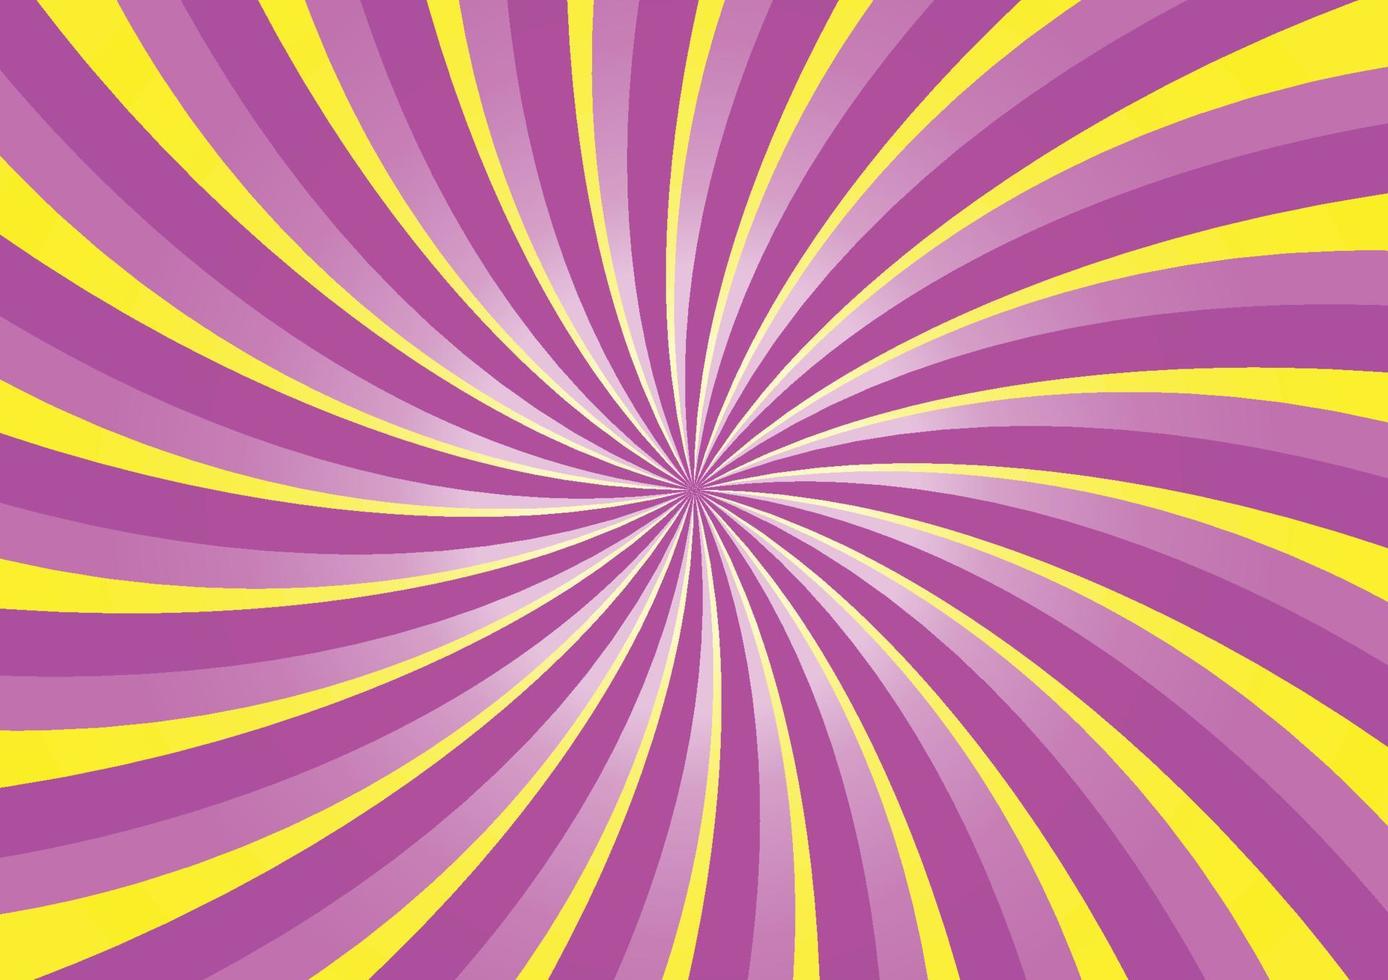 Abstract backgrounds texture light purple rays sunbeam wallpaper backdrop pattern vector illustration EPS10